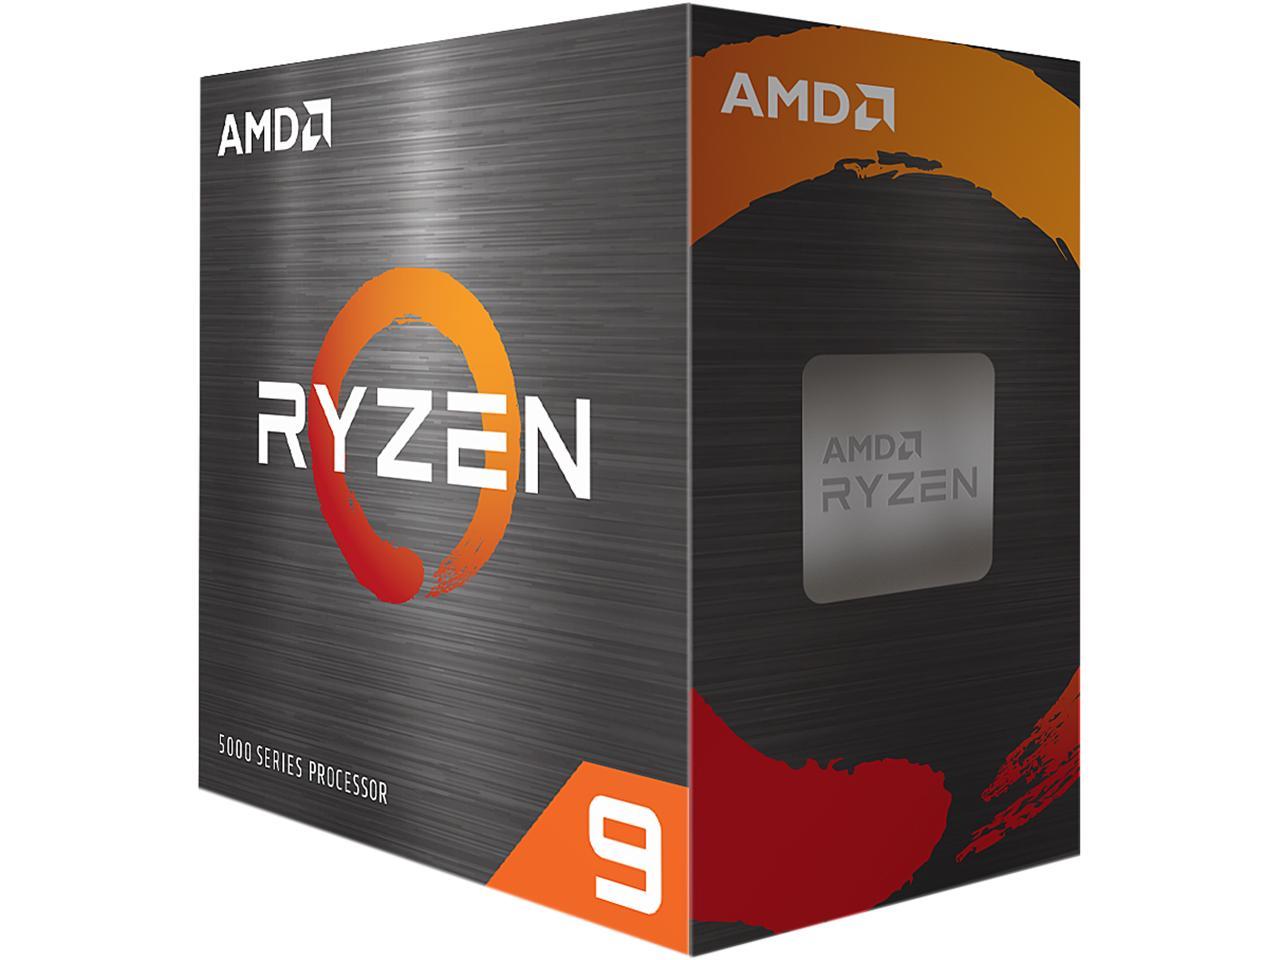 AMD Ryzen 9 5900X AM4 105W Desktop Processor CPU $312 + Free Shipping